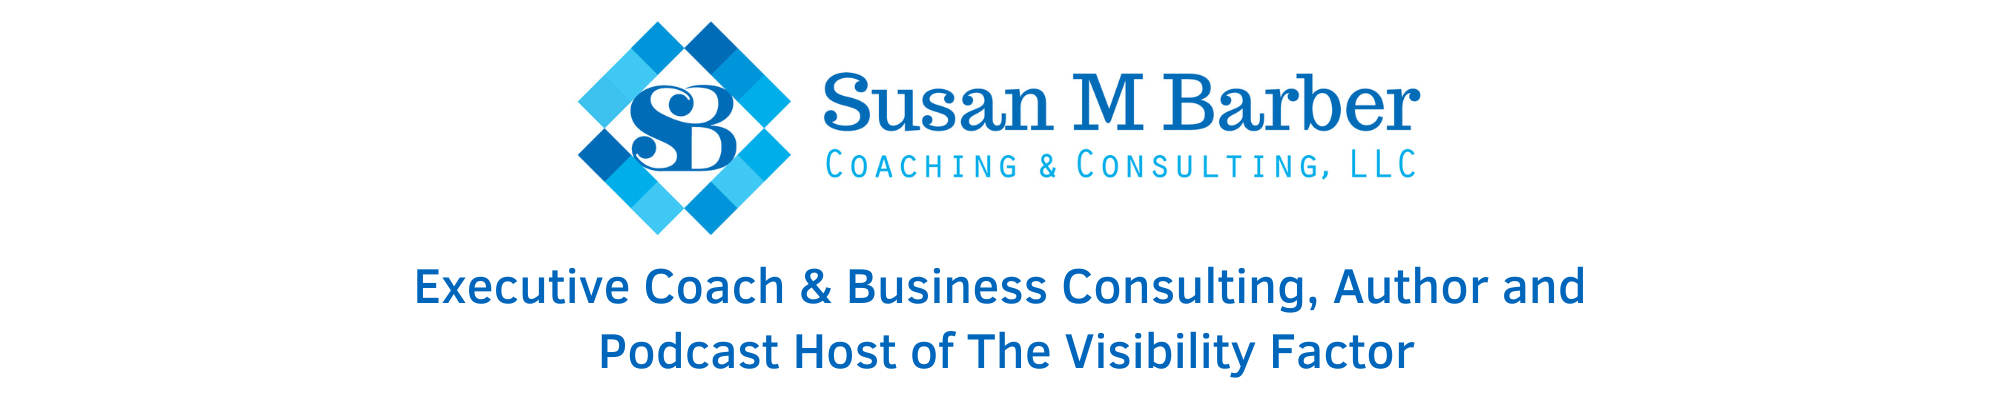 Susan M Barber Coaching & Consulting, LLC